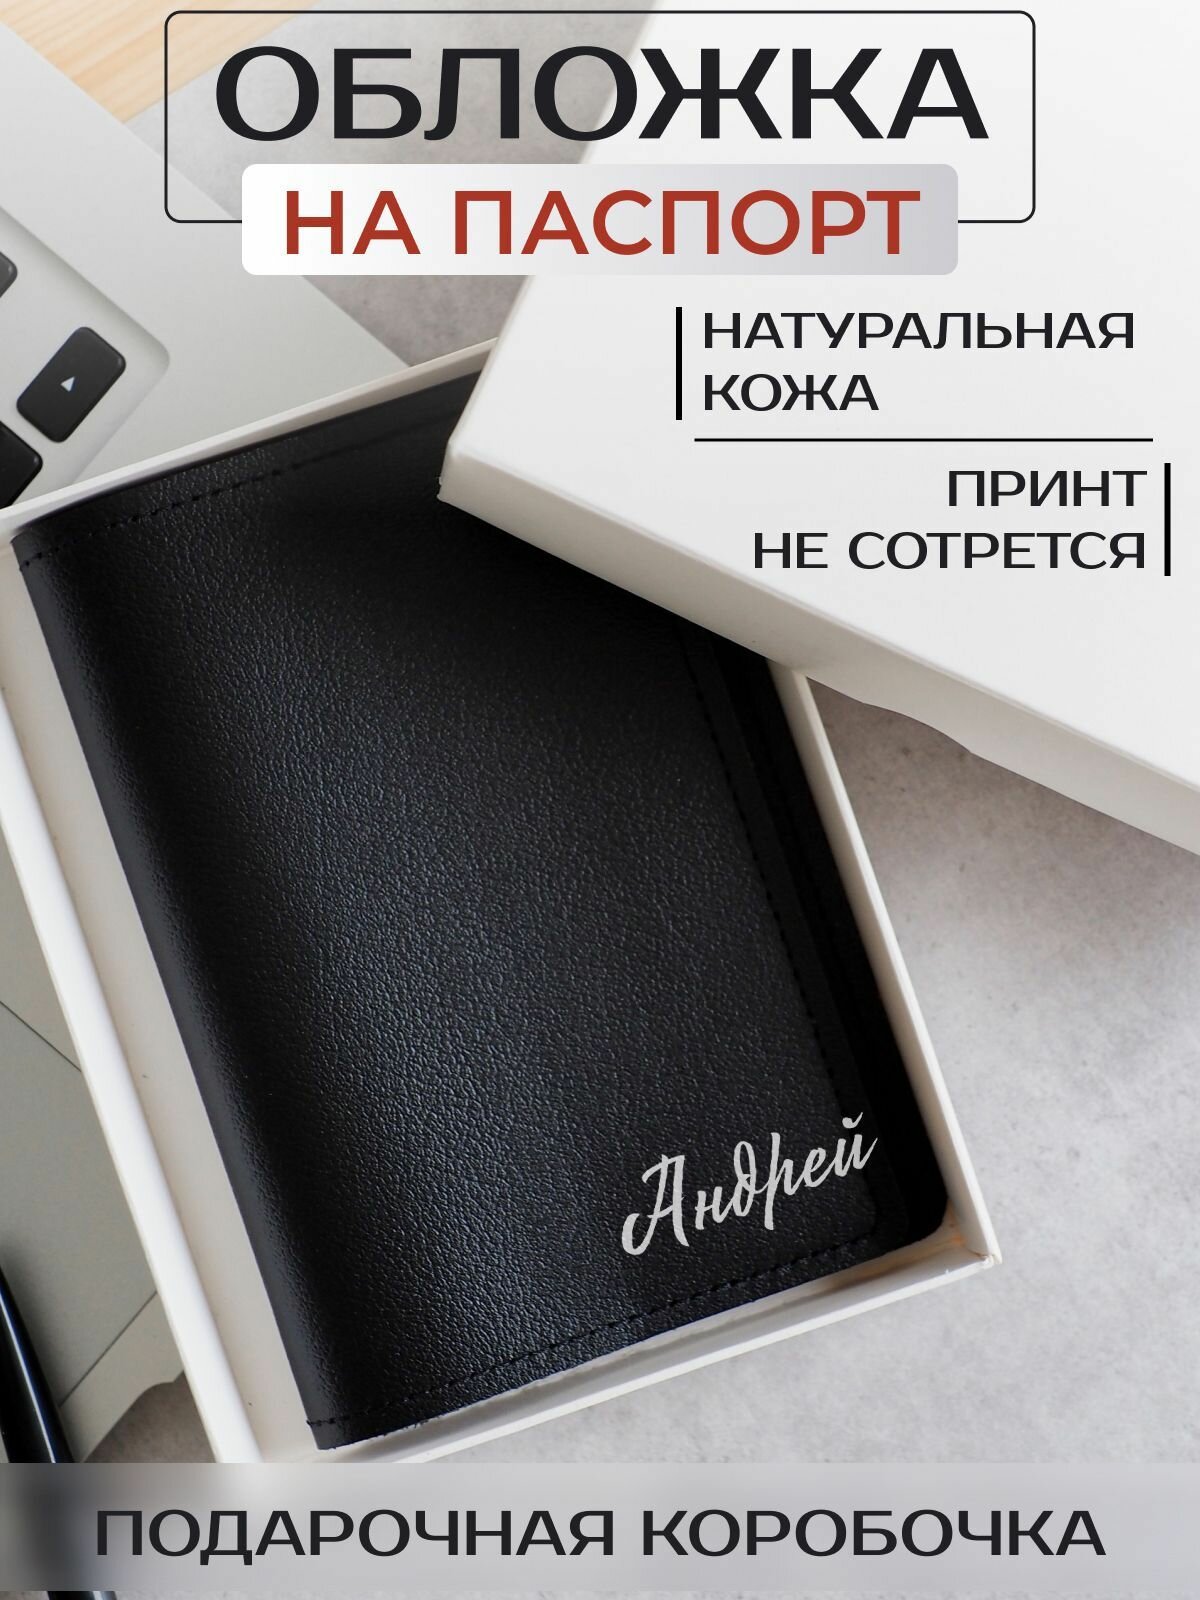 Обложка для паспорта RUSSIAN HandMade Кожаная обложка на паспорт мужские имена